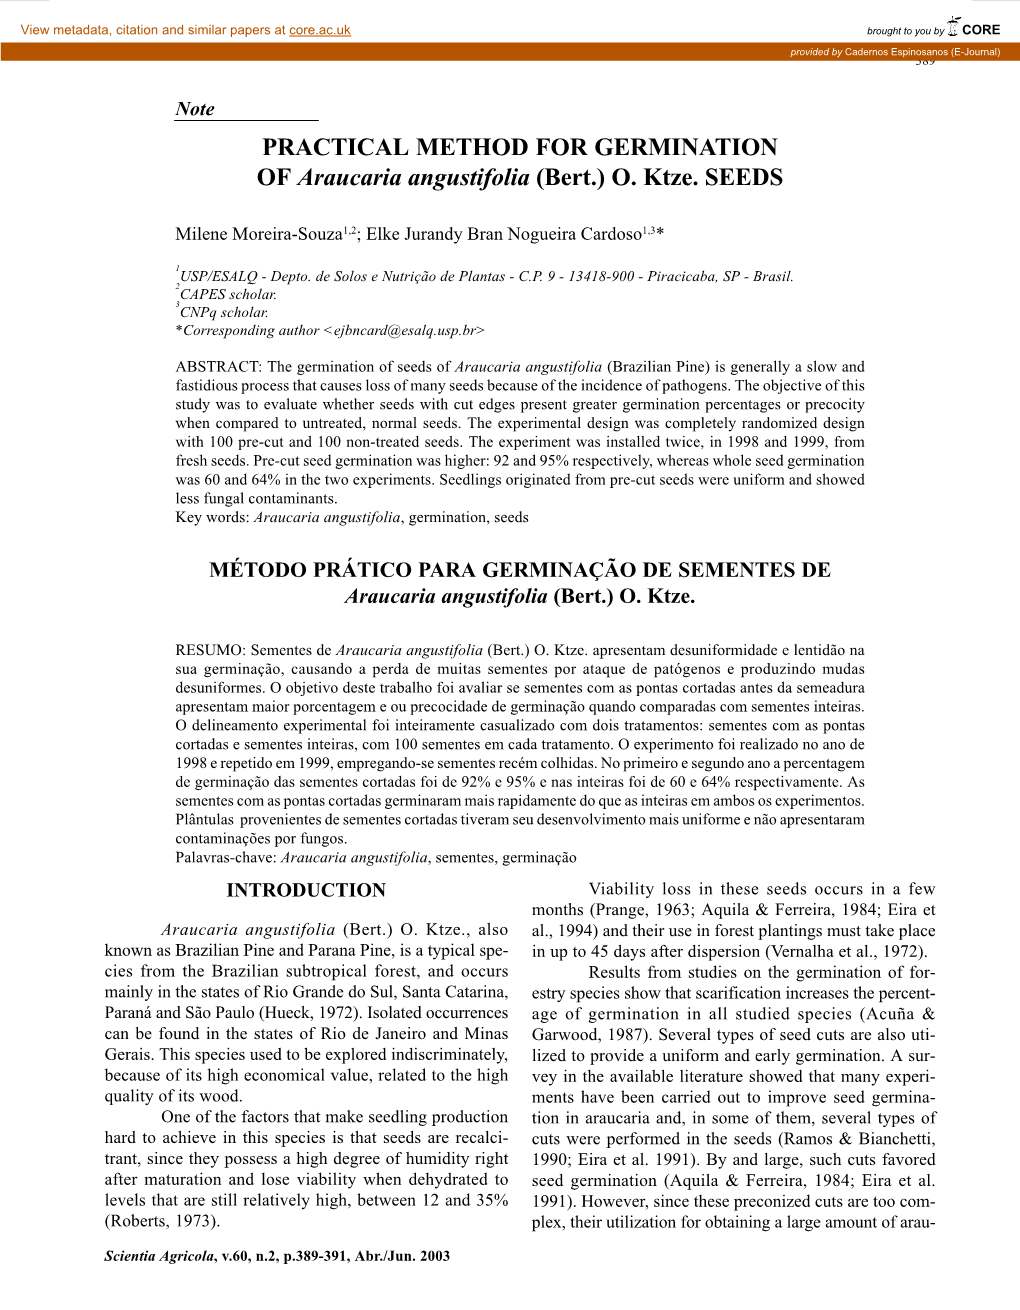 PRACTICAL METHOD for GERMINATION of Araucaria Angustifolia (Bert.) O